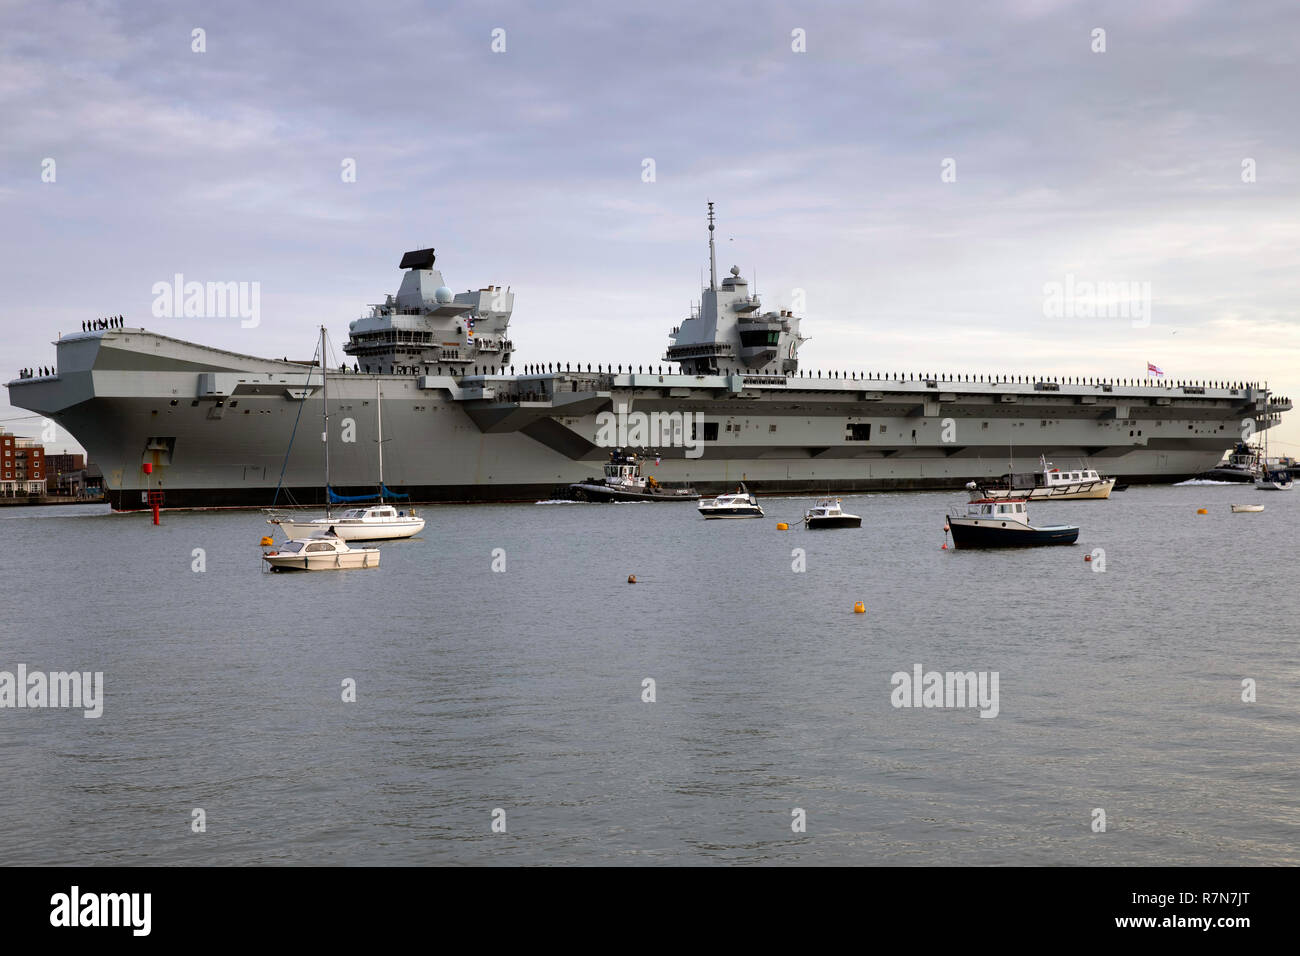 Royal Navy flagship HMS Queen Elizabeth arriving at her home port of Portsmouth on 10 December 2018 Stock Photo